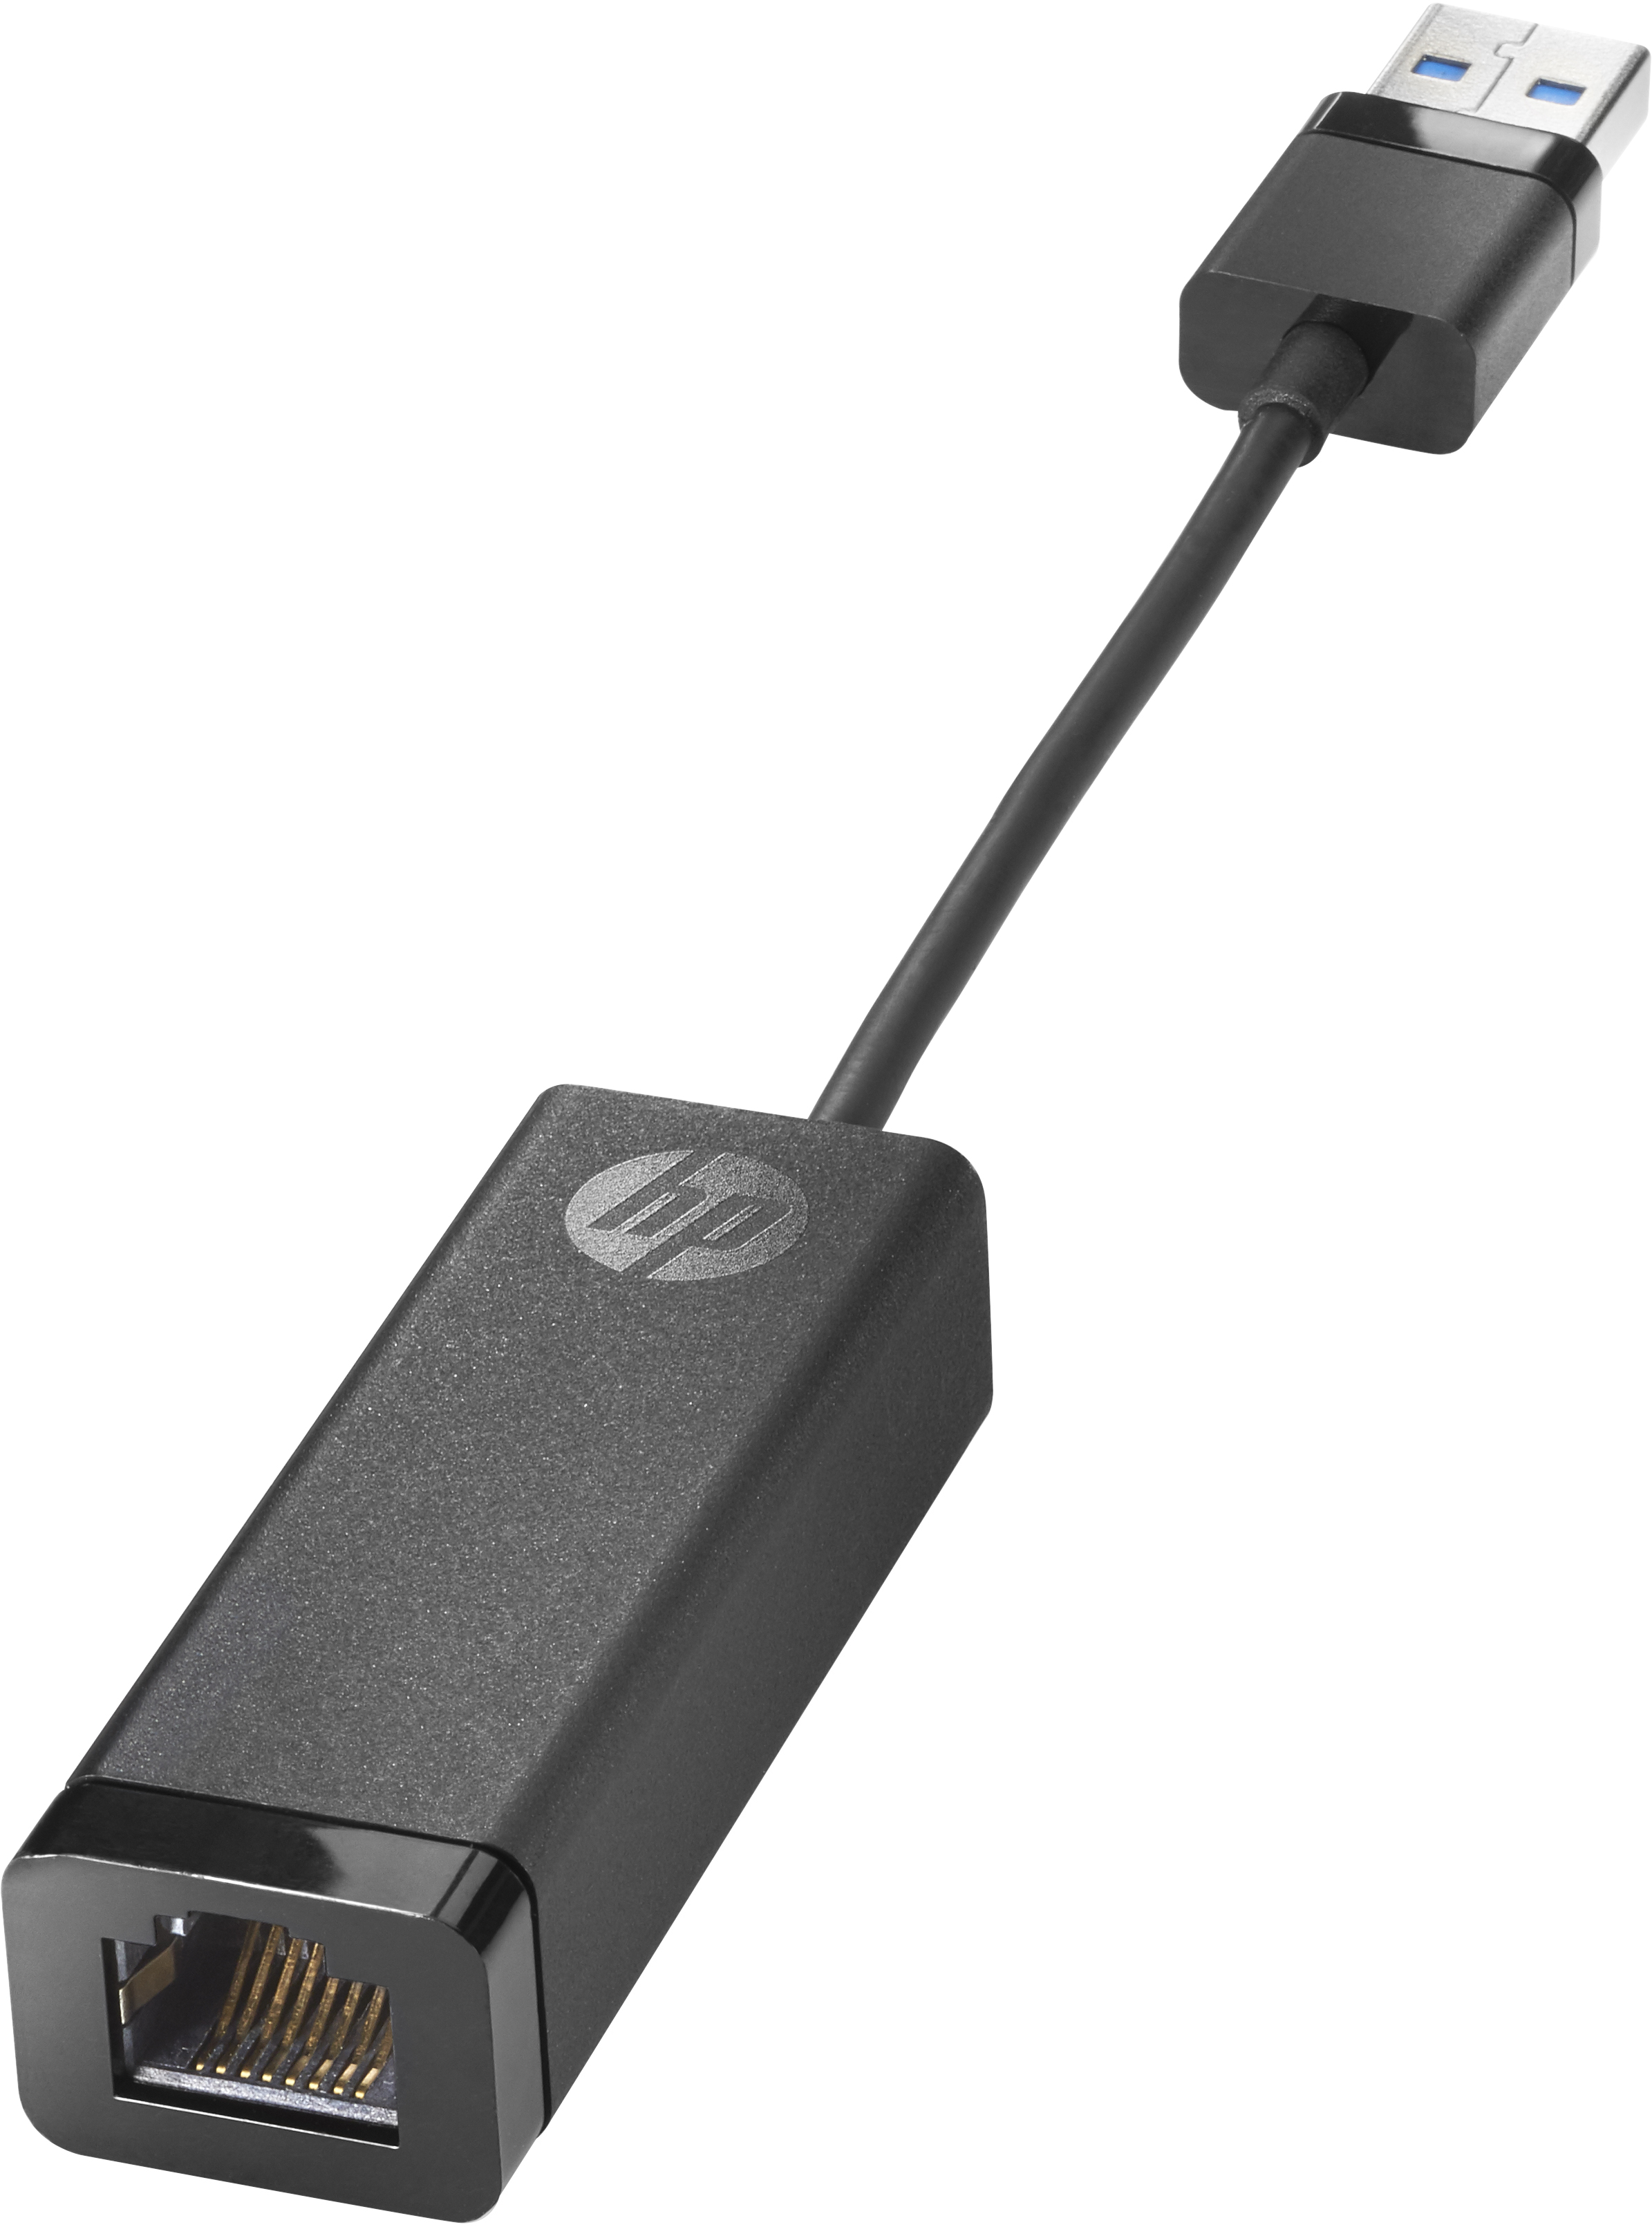  USB 3.0 to Gig RJ45 Adapter G2